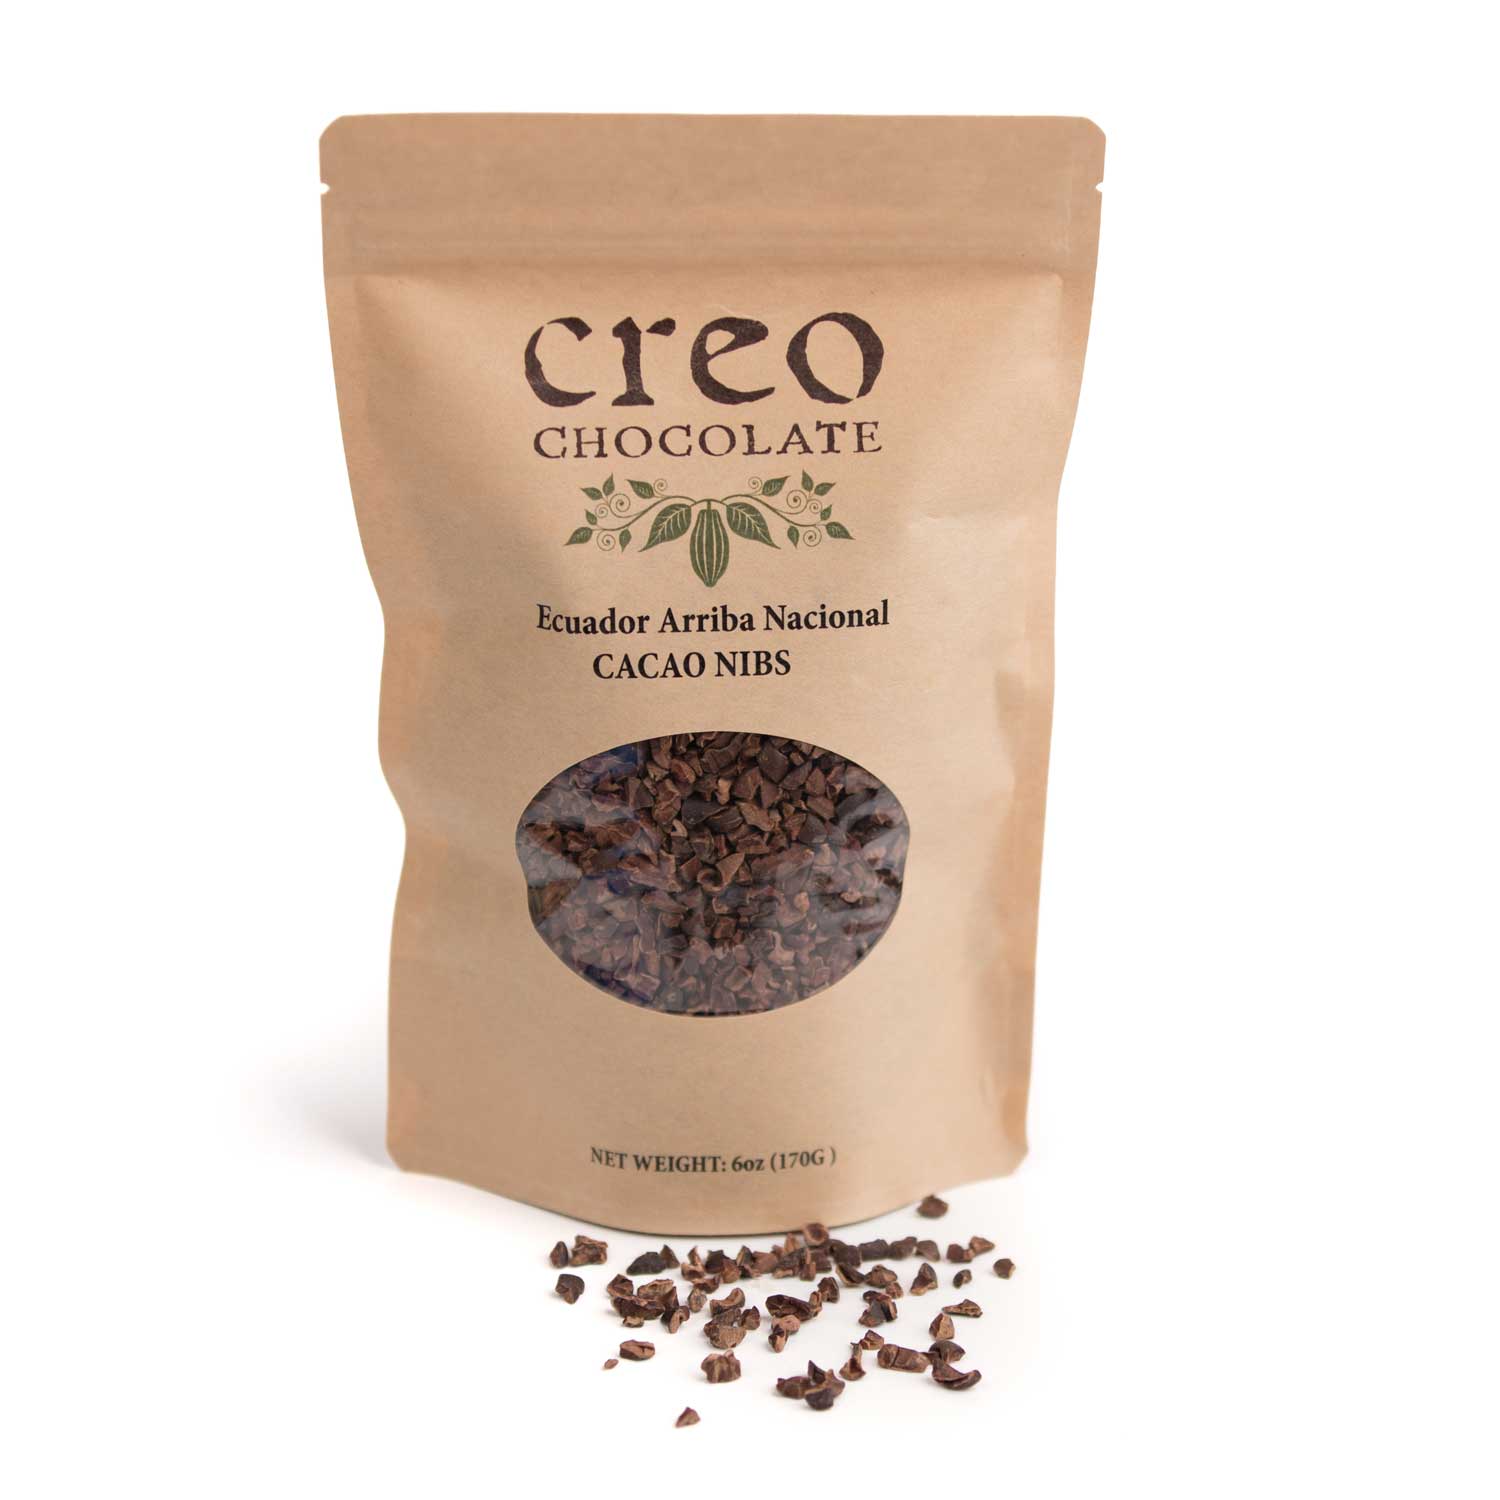 Roasted Cacao Nibs - Creo Chocolate